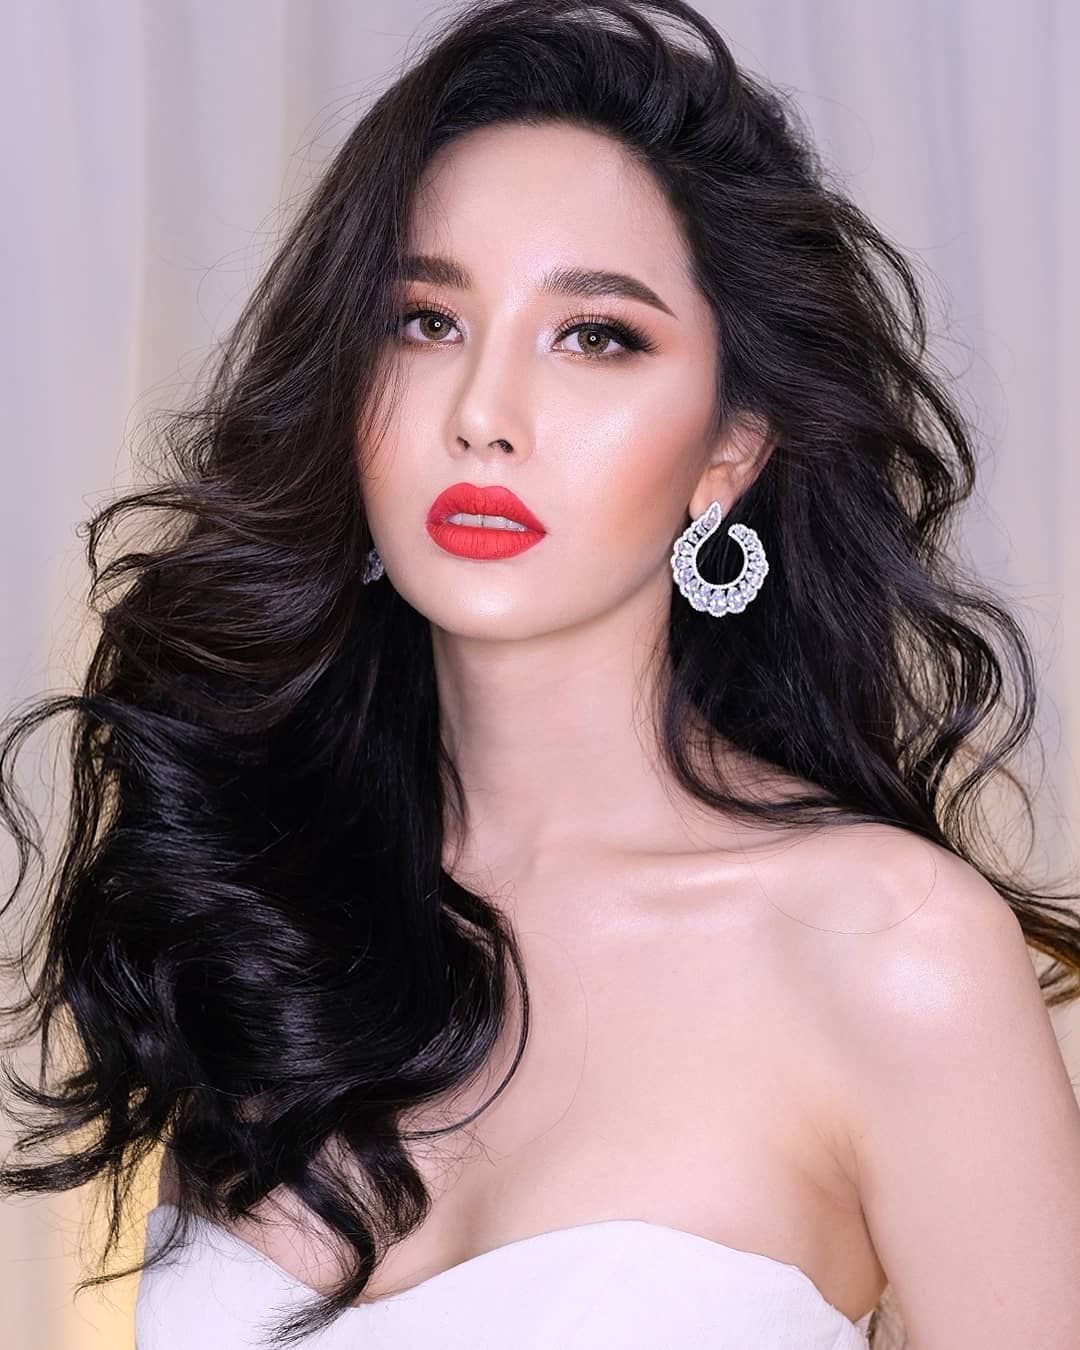 Meen siriprpa – Most Beautiful Thailand Transgender Makeup Models - TG ...